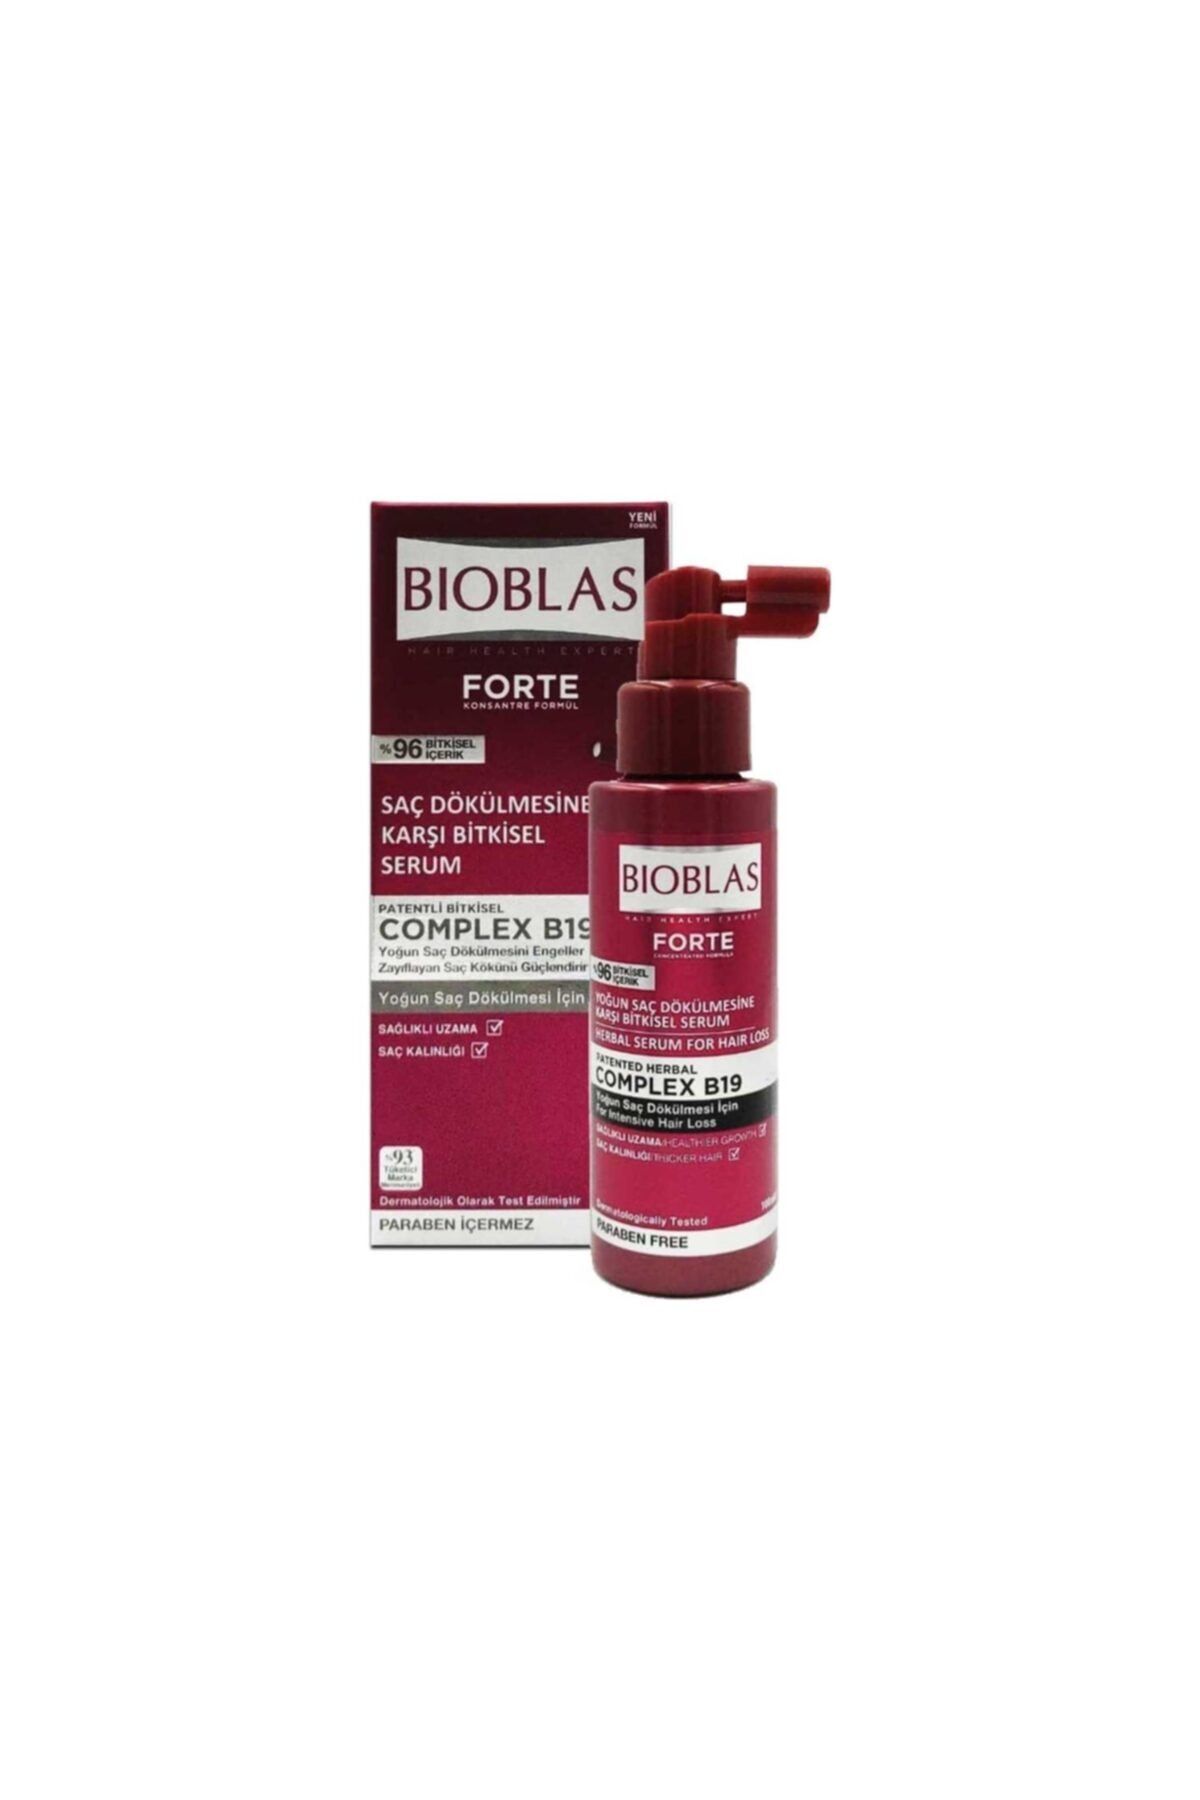 Bioblas Forte Saç Dökülmesine Karşı Bitkisel Serum 100 ml